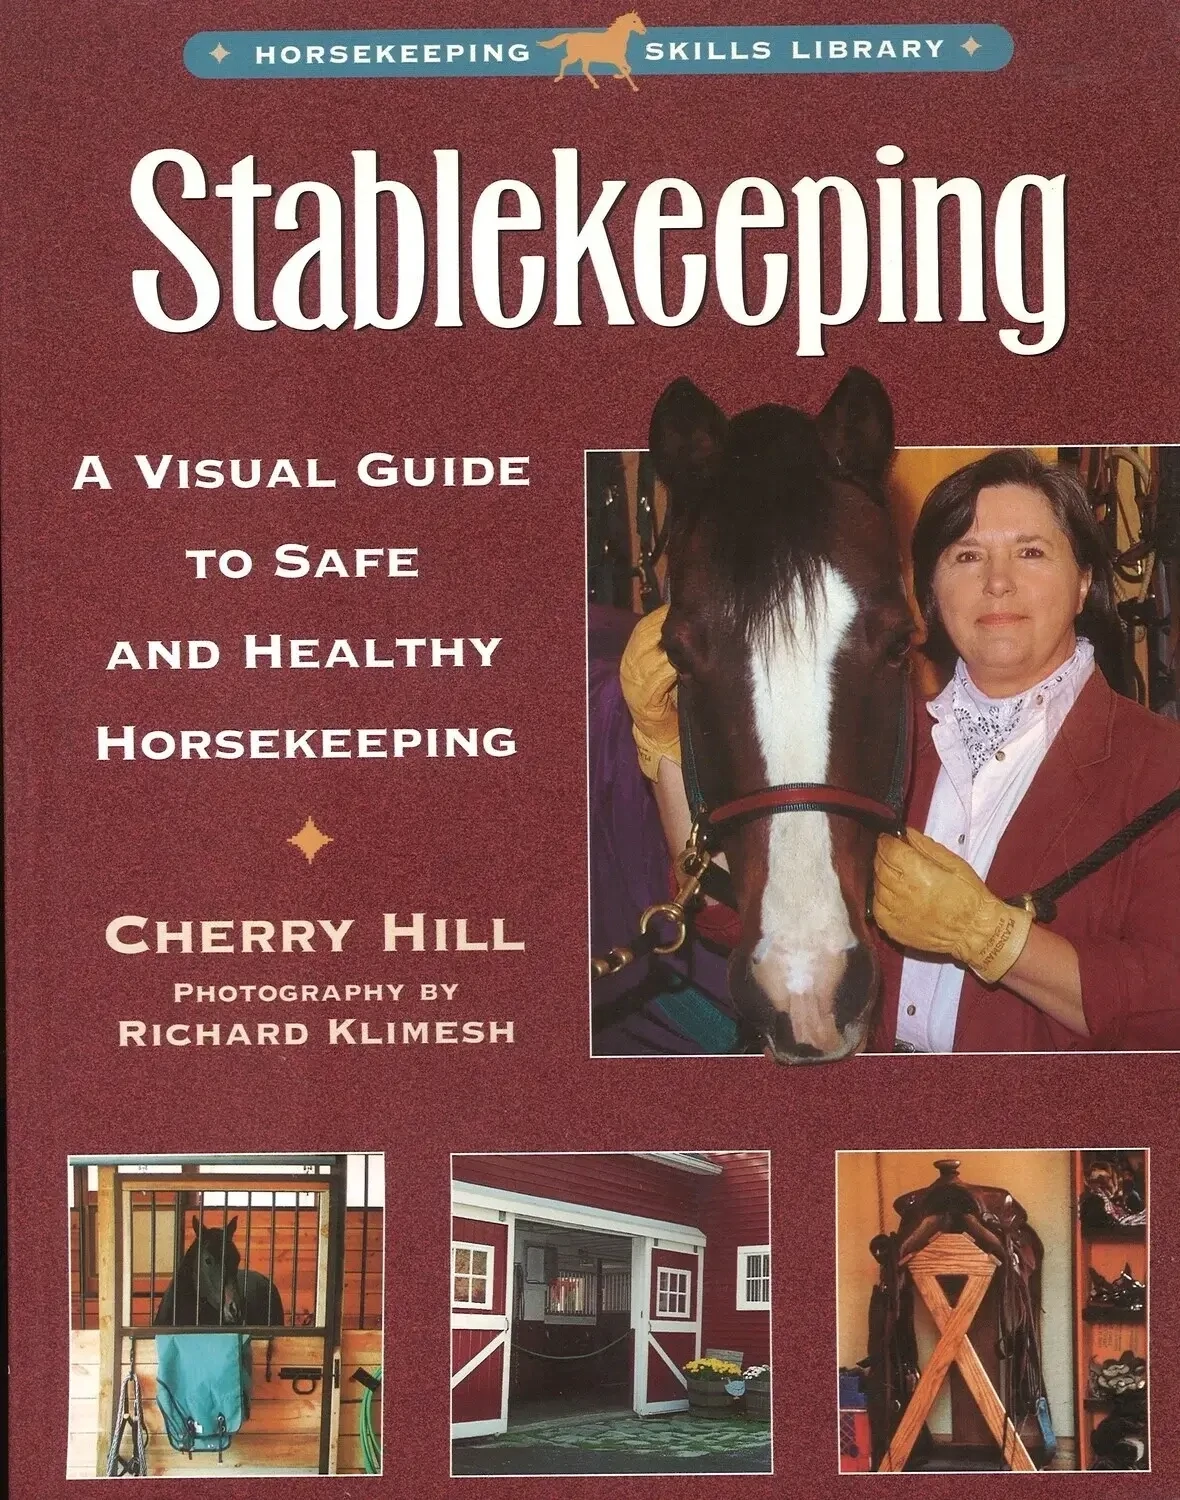 Stablekeeping - (Horsekeeping Skills Library), Cherry Hill